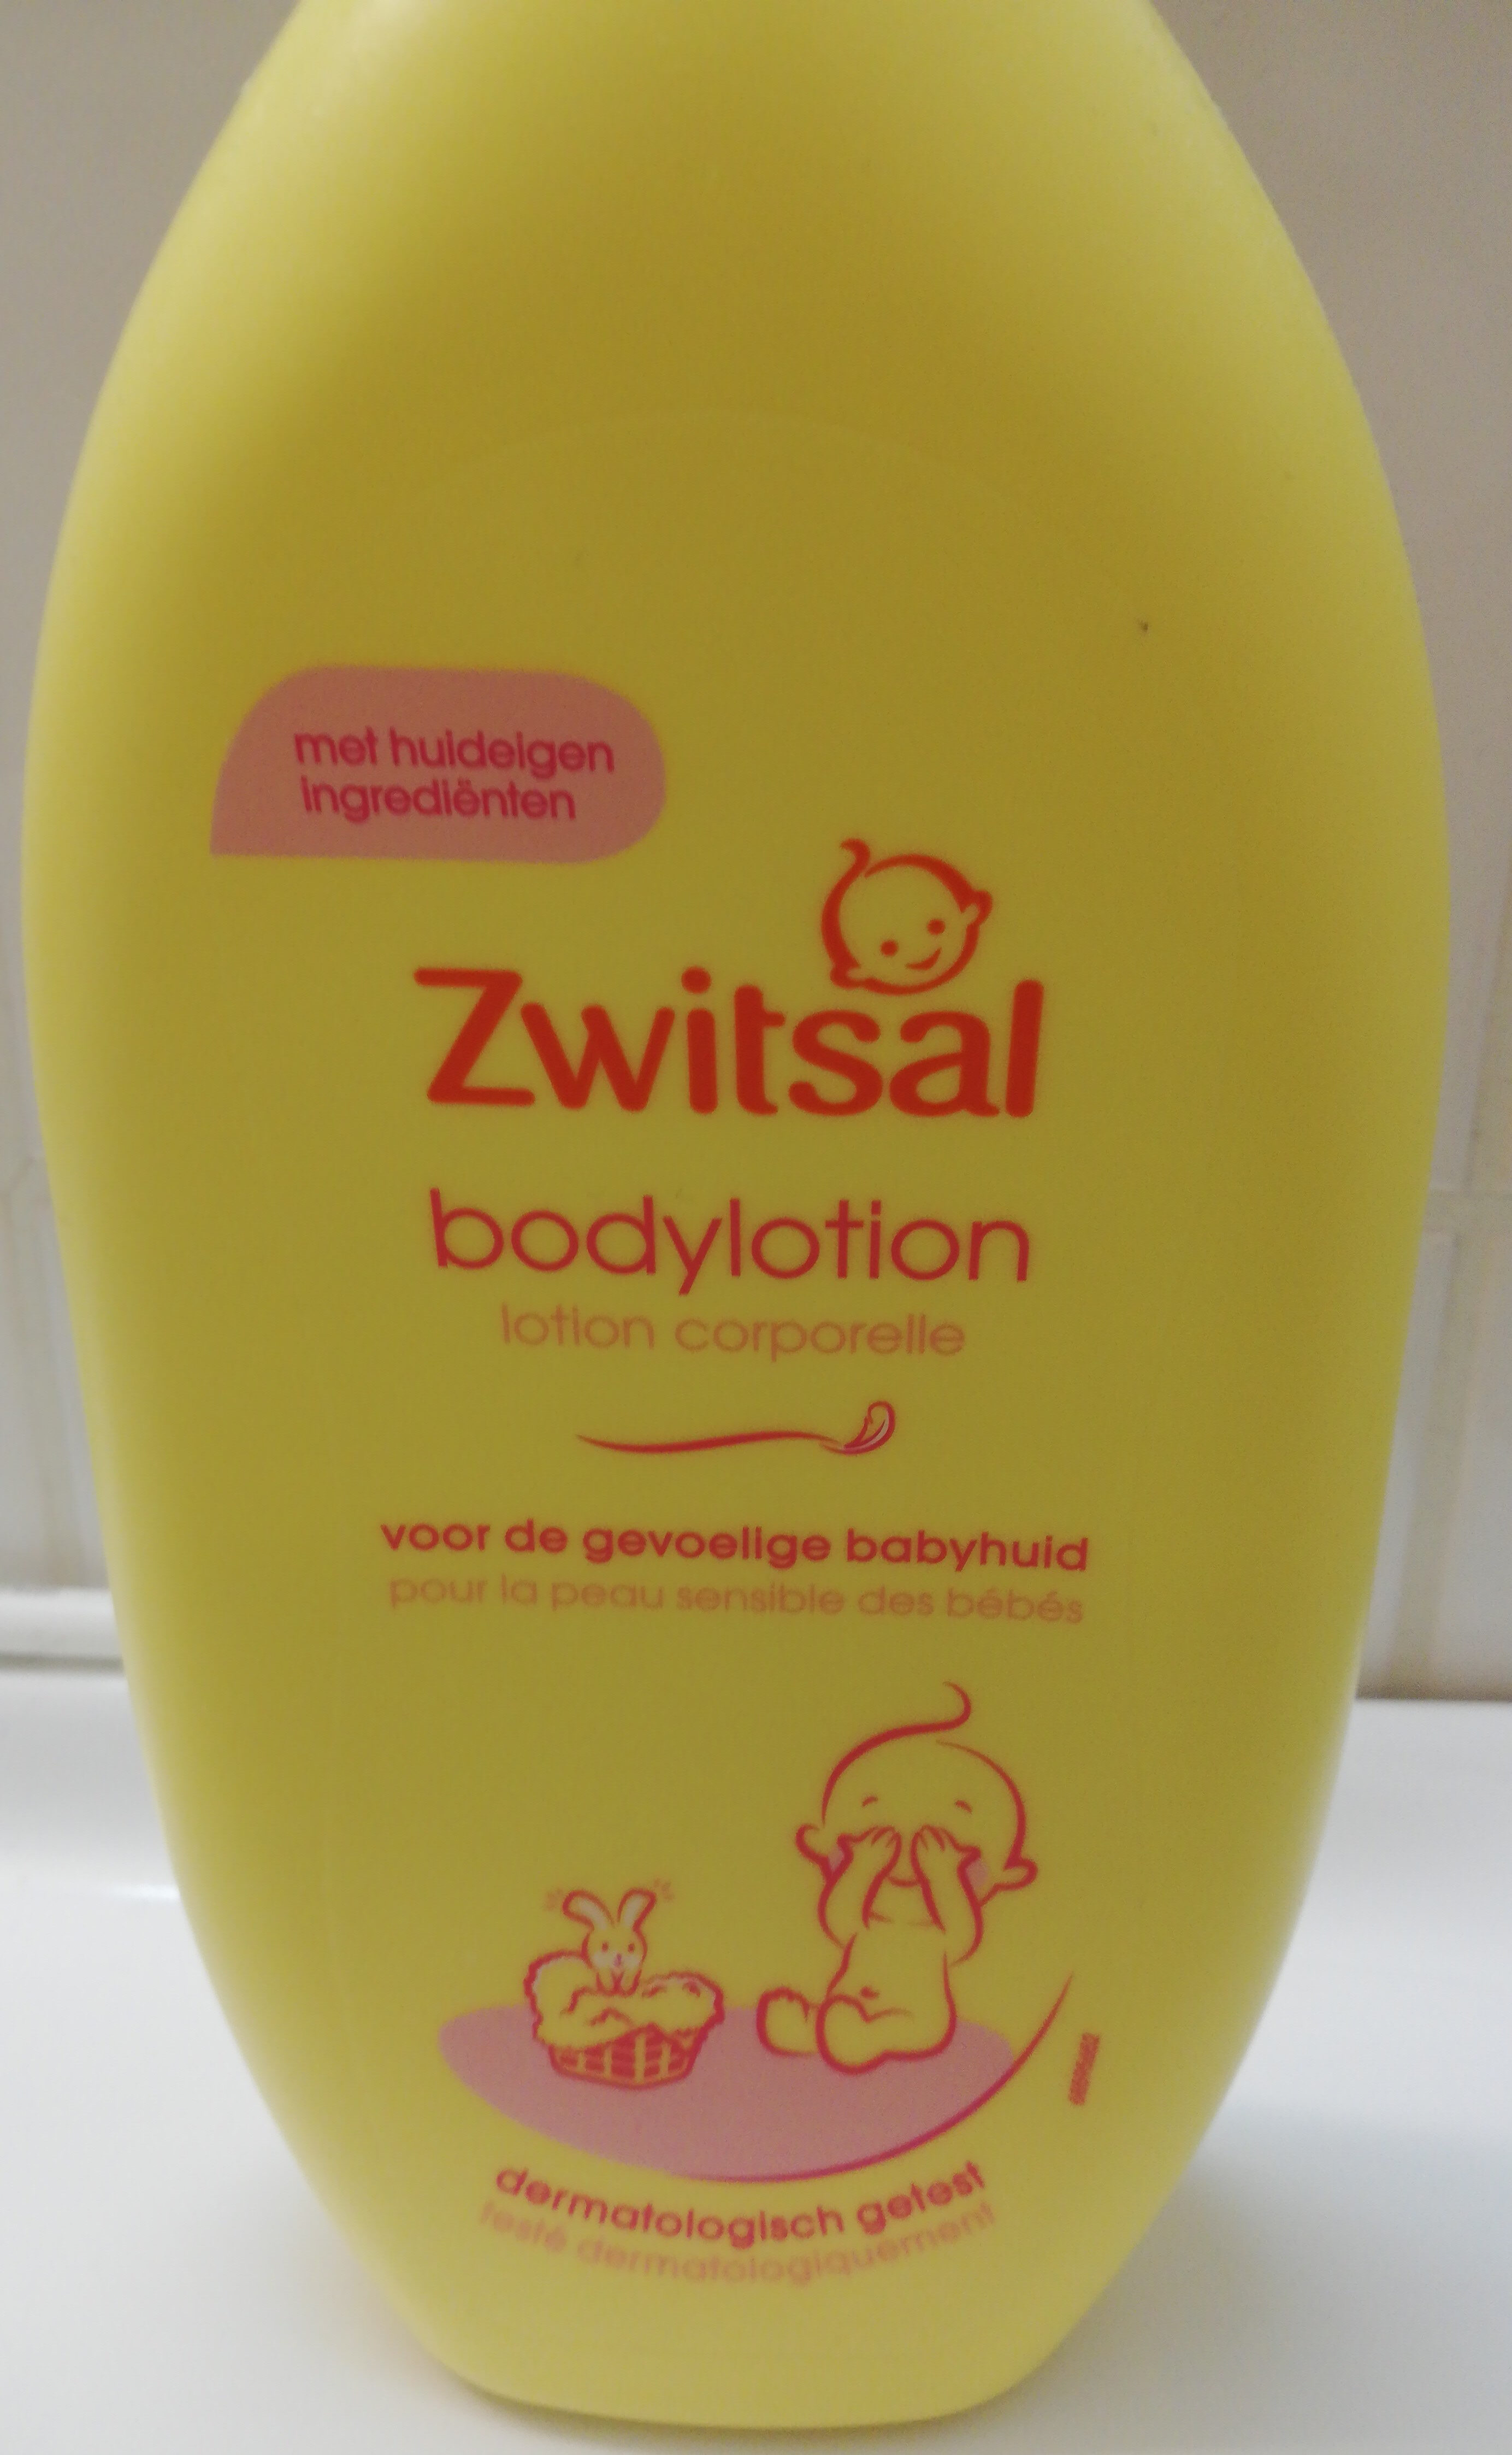 Zwitsal bodylotion - Product - nl